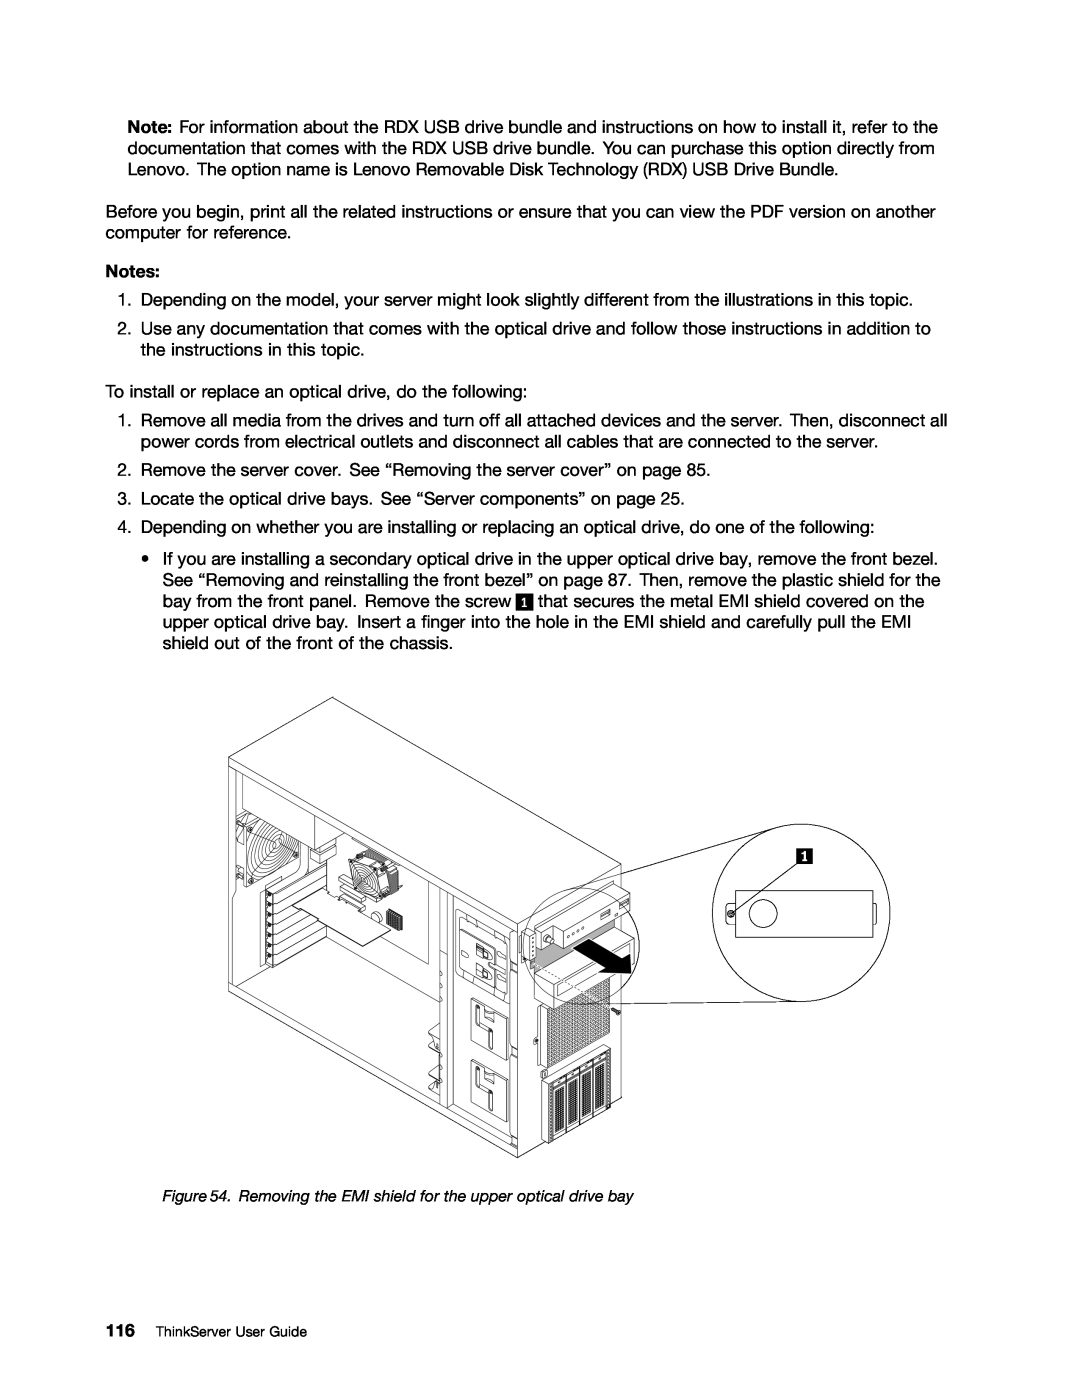 Lenovo 387, 393, 391, 389, 388, 441, 390, 392 Removing the EMI shield for the upper optical drive bay, ThinkServer User Guide 